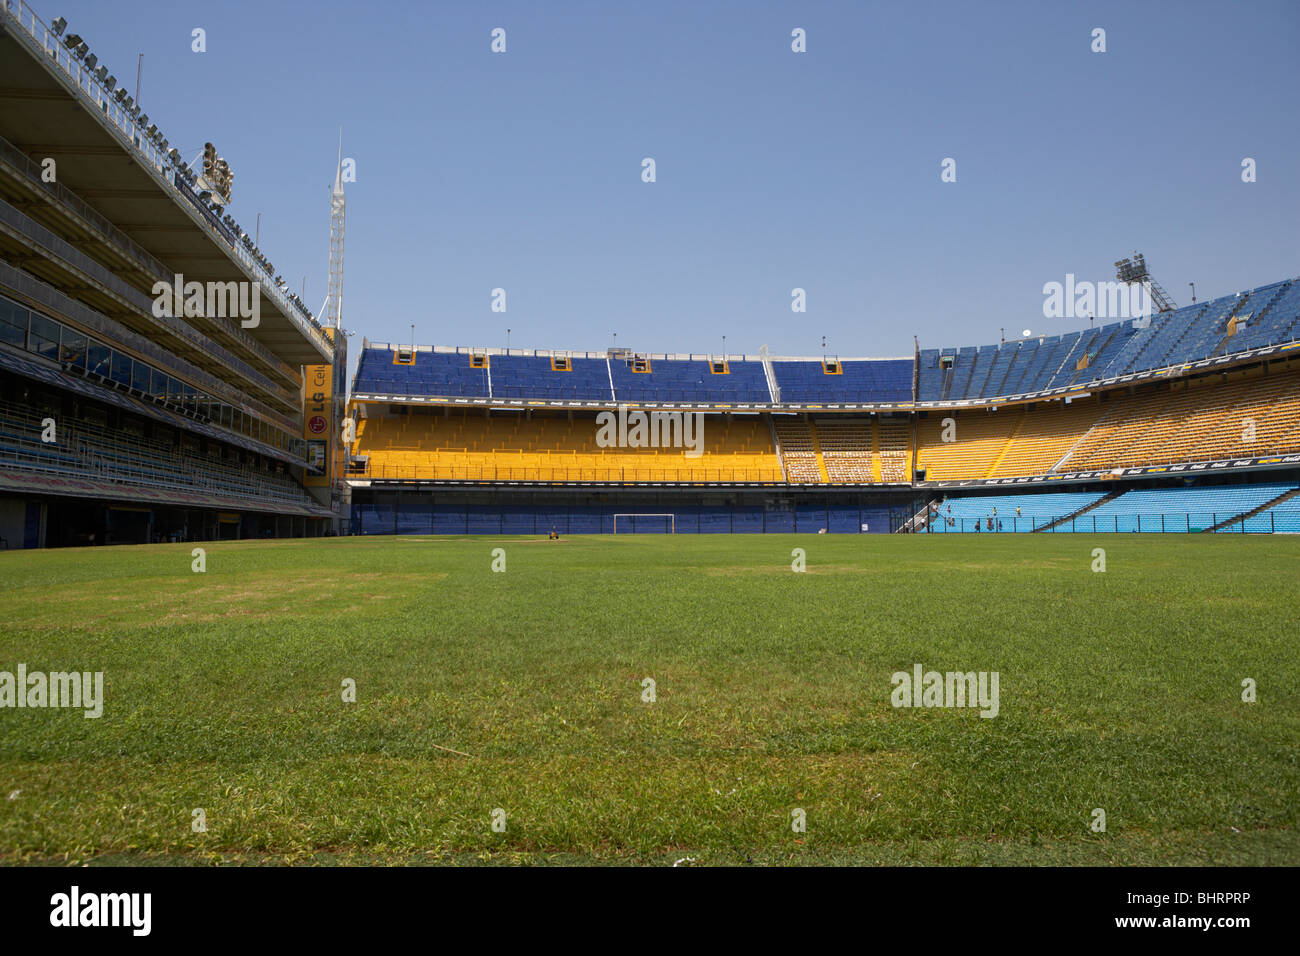 pitch and stands interior of Alberto J Armando la bombonera stadium home to atletico boca juniors football club Stock Photo